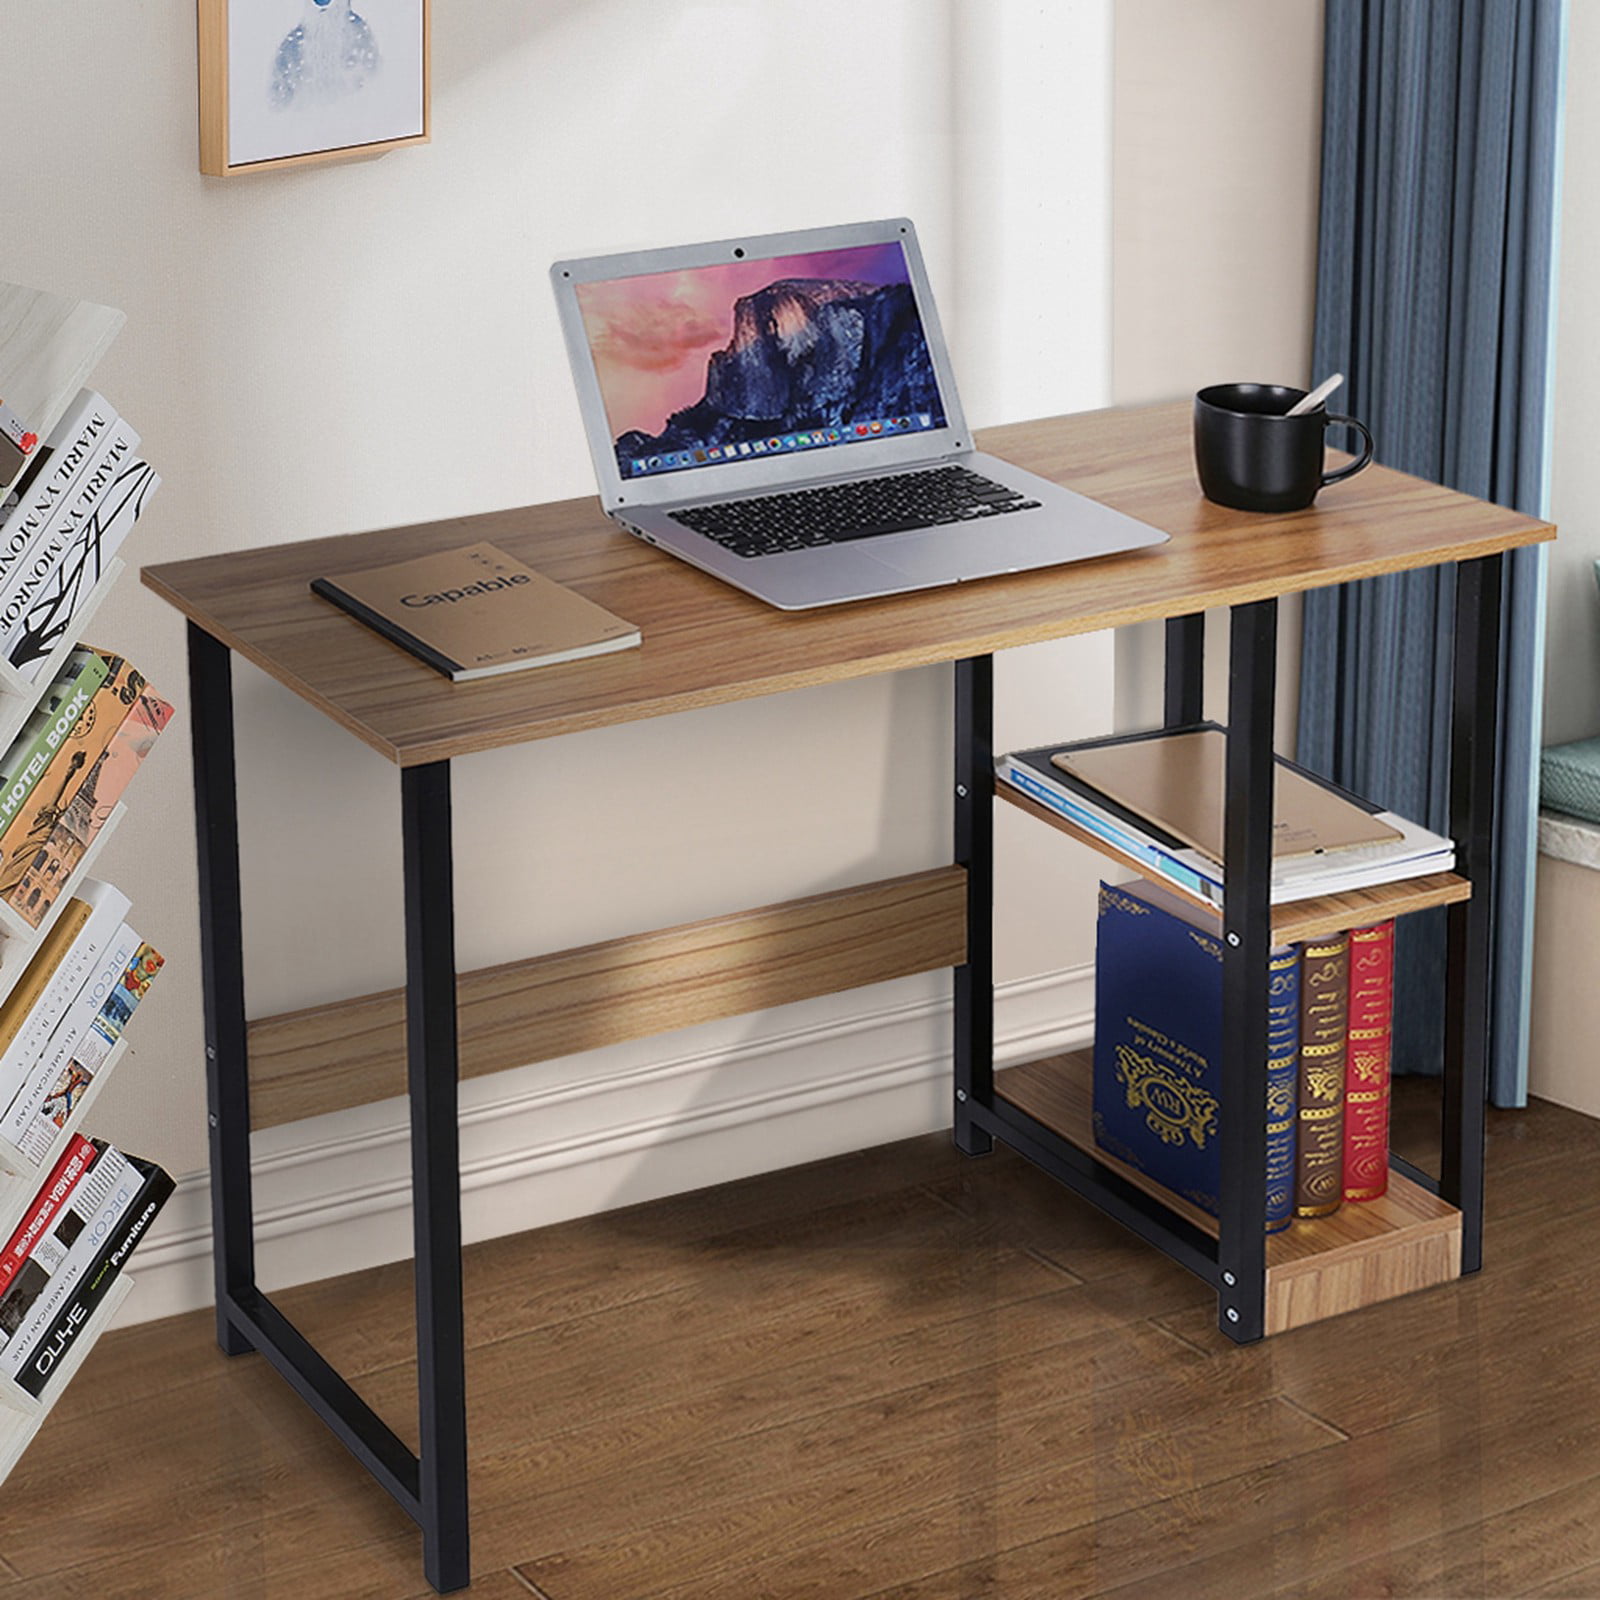 Details about   Home Office Computer Desk Desk PC Laptop Study Workstation Table W/Bookshelf 